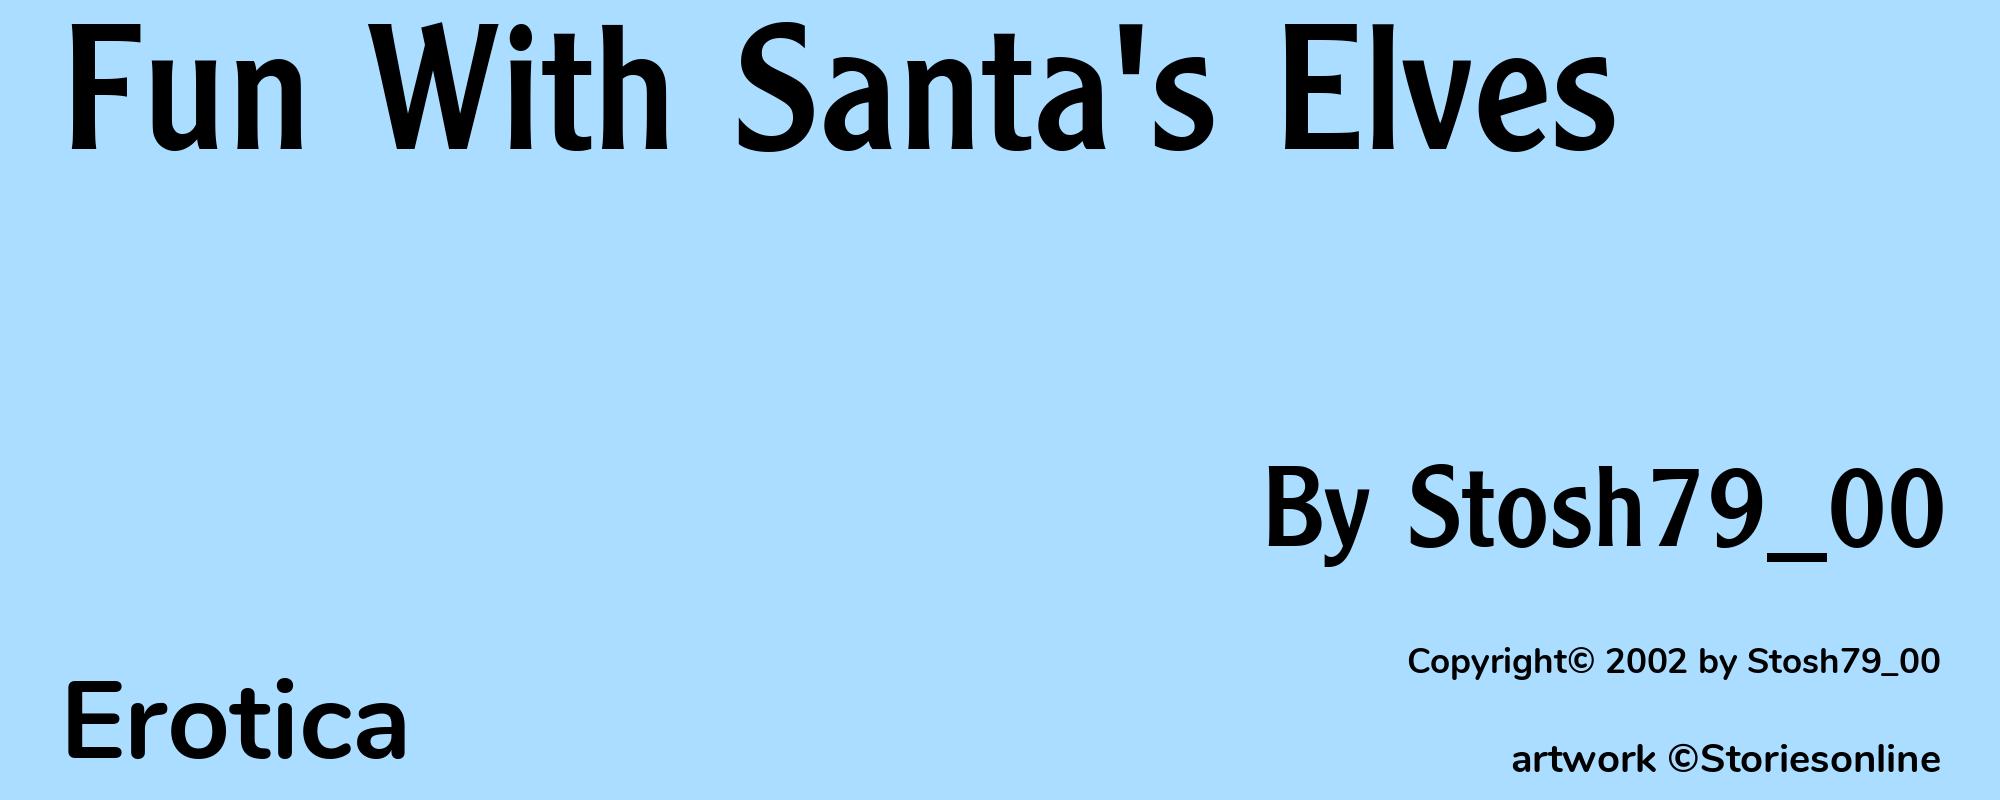 Fun With Santa's Elves - Cover